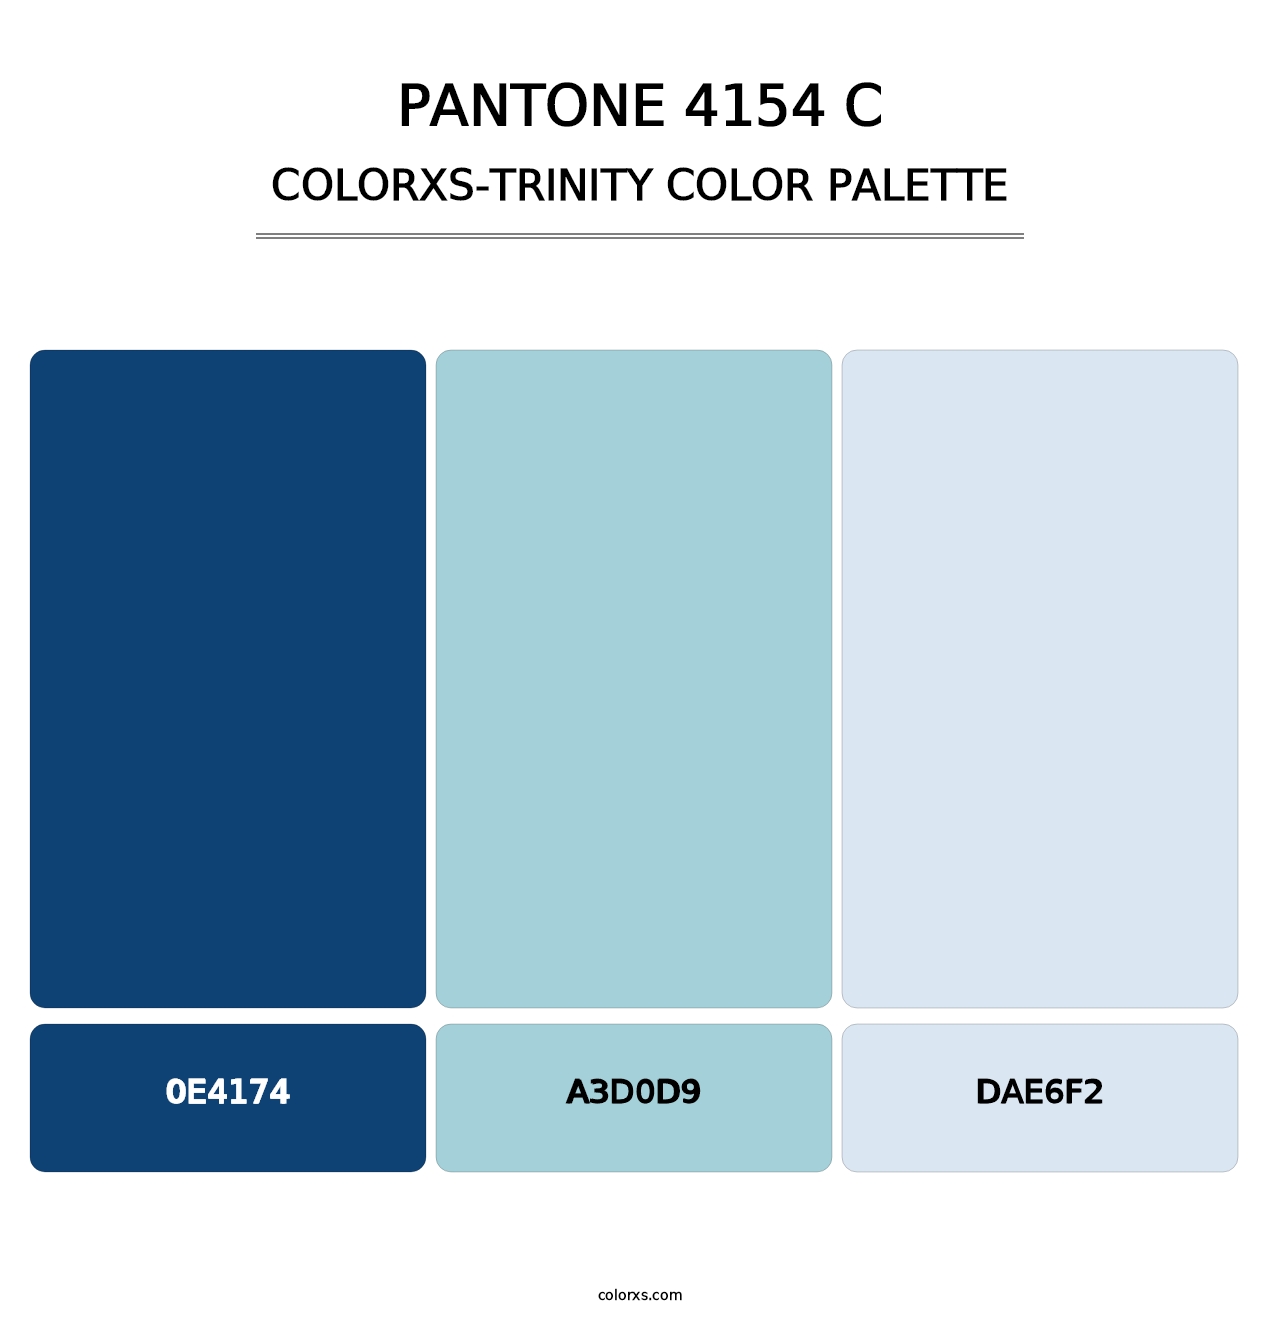 PANTONE 4154 C - Colorxs Trinity Palette